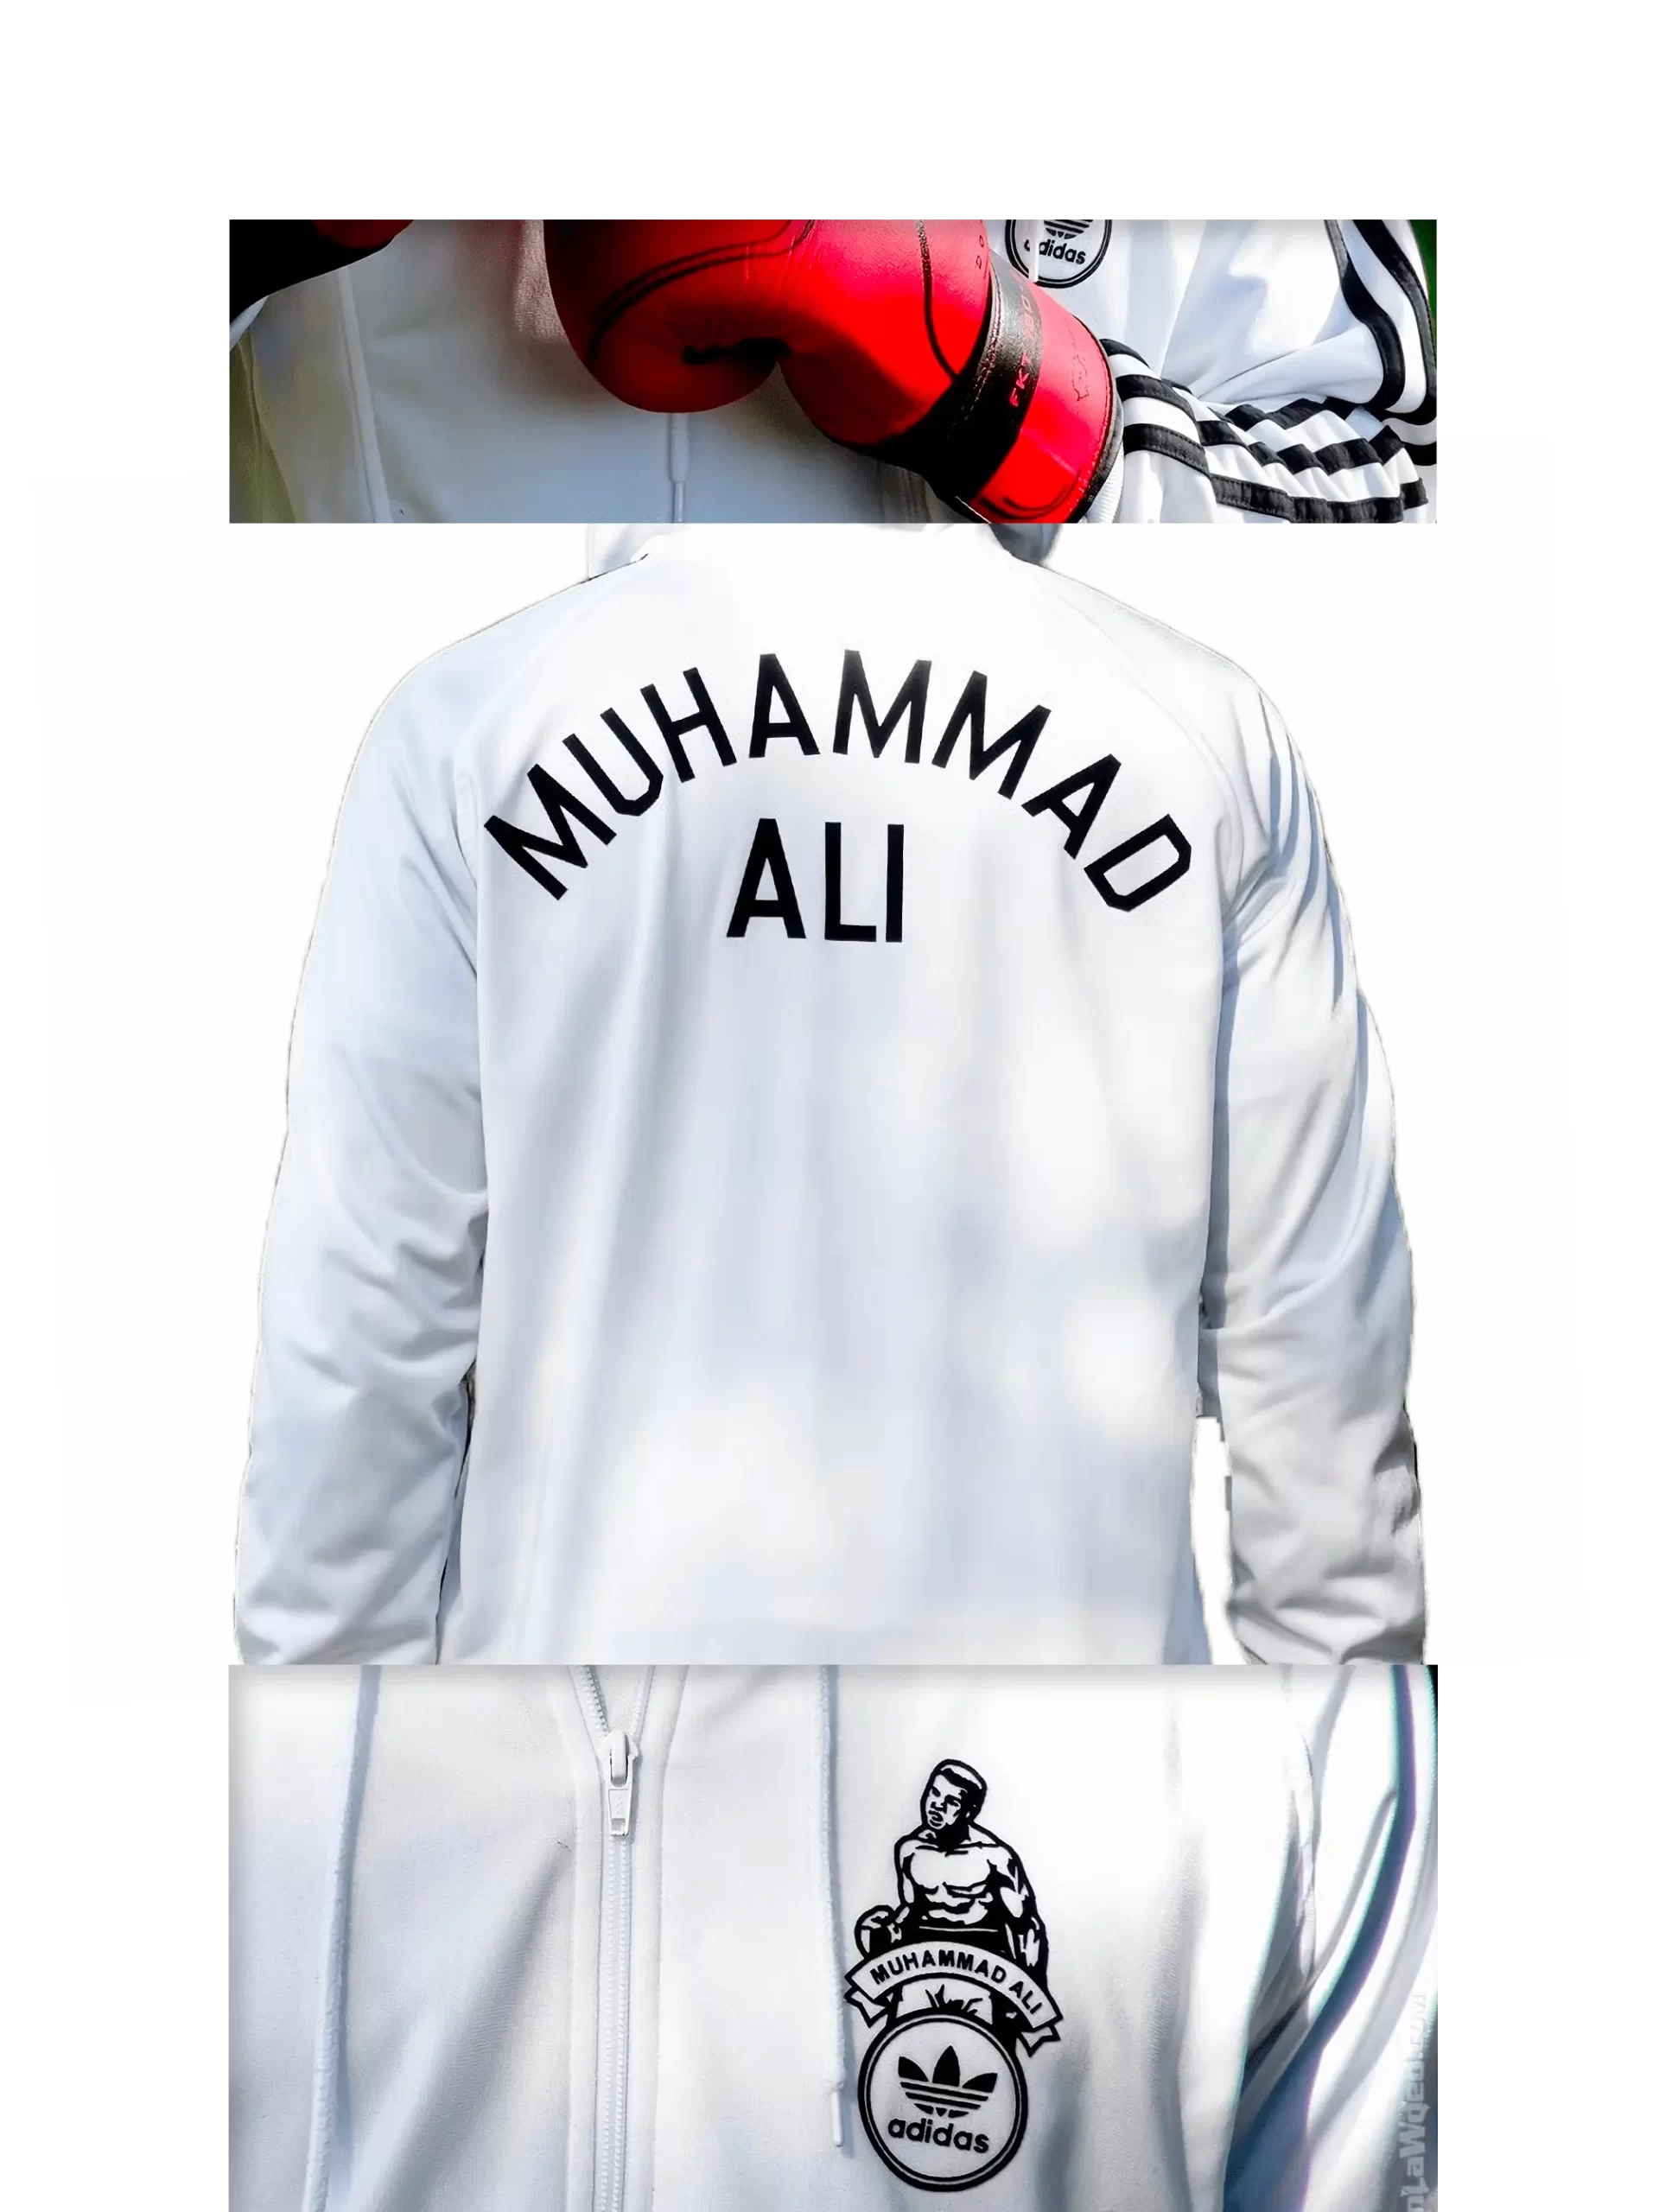 Men's 2005 Muhammad Ali Boxing Ring Hoodie by Adidas: Force-fed (EnLawded.com file #lmchk78158ip2y124785kg9st)